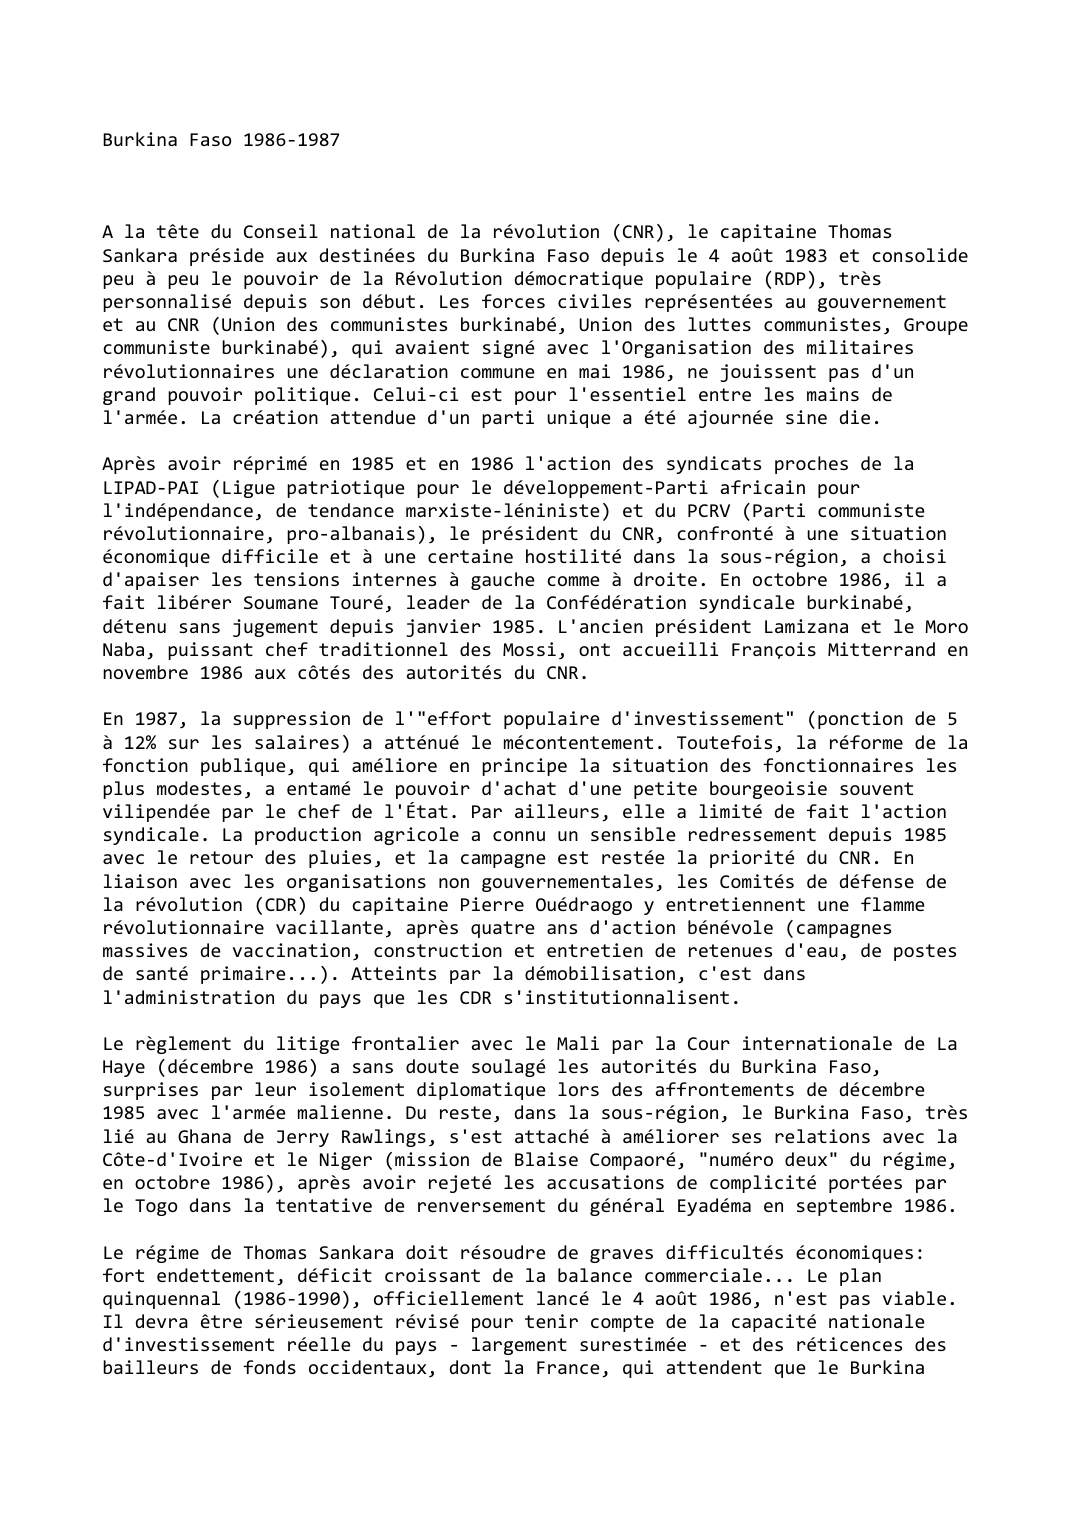 Prévisualisation du document Burkina Faso (1986-1987)